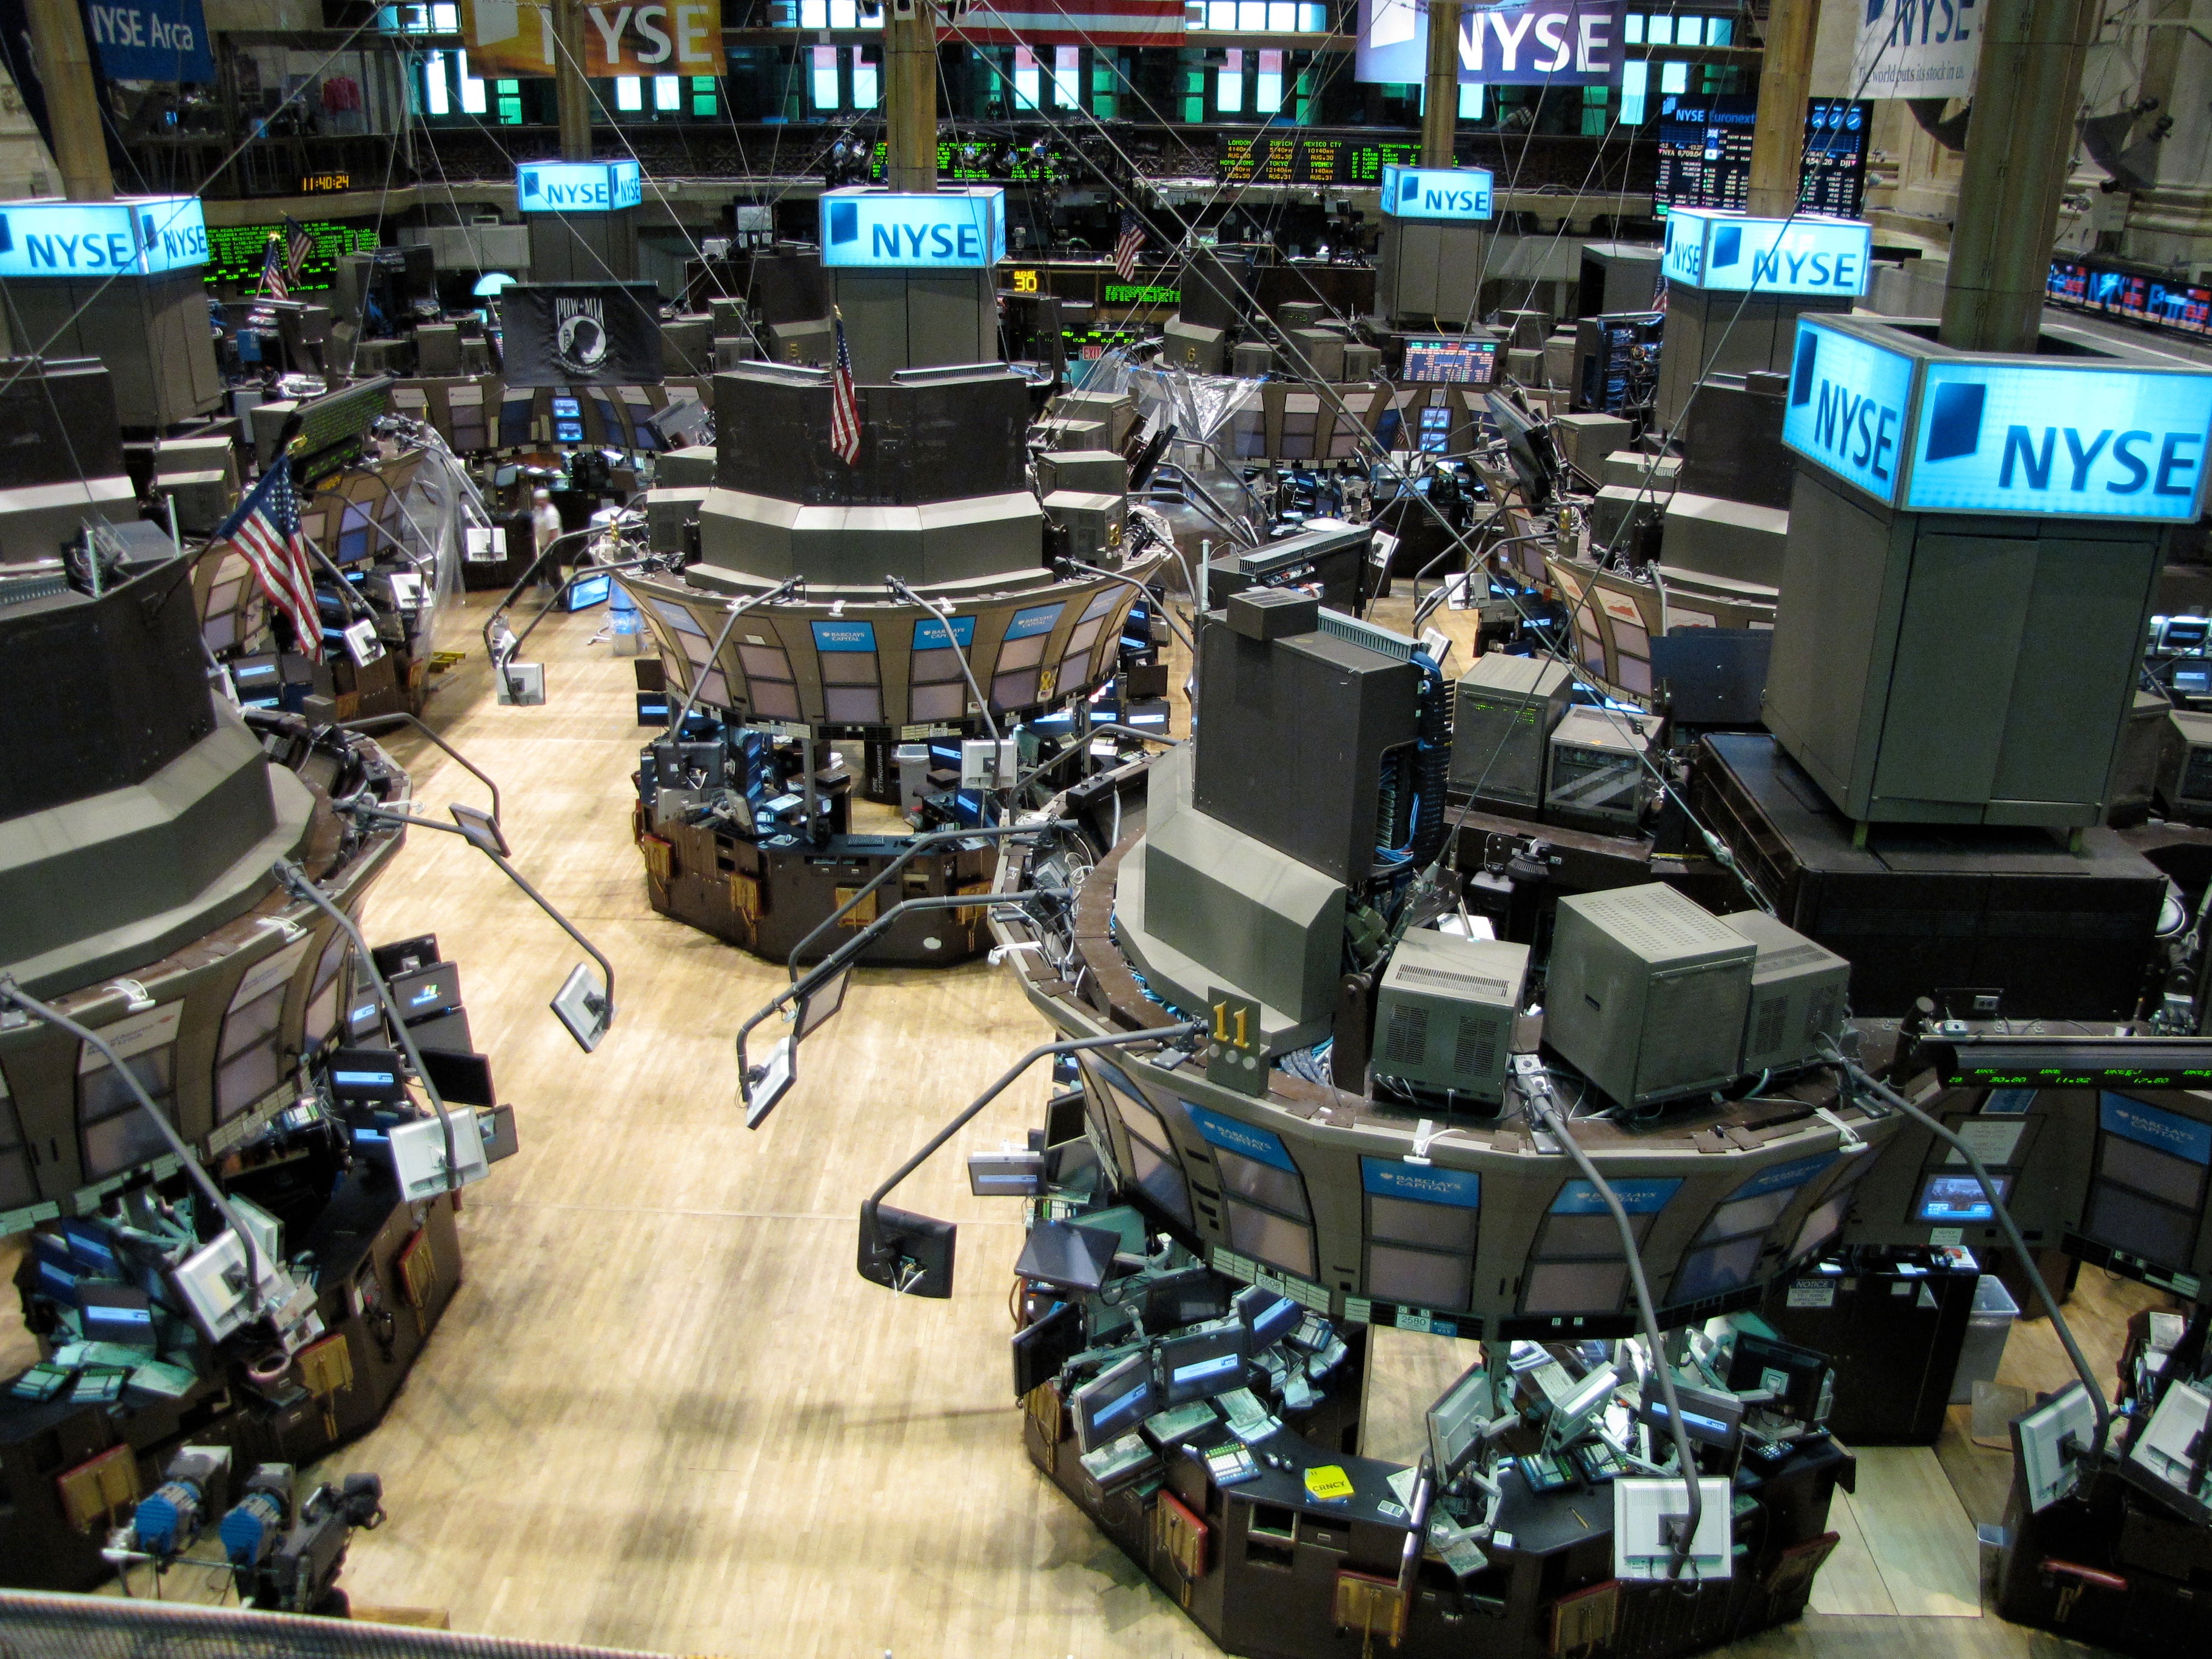 In A Major U-Turn, NYSE Says Will Not Delist China's Major Telecom Operators